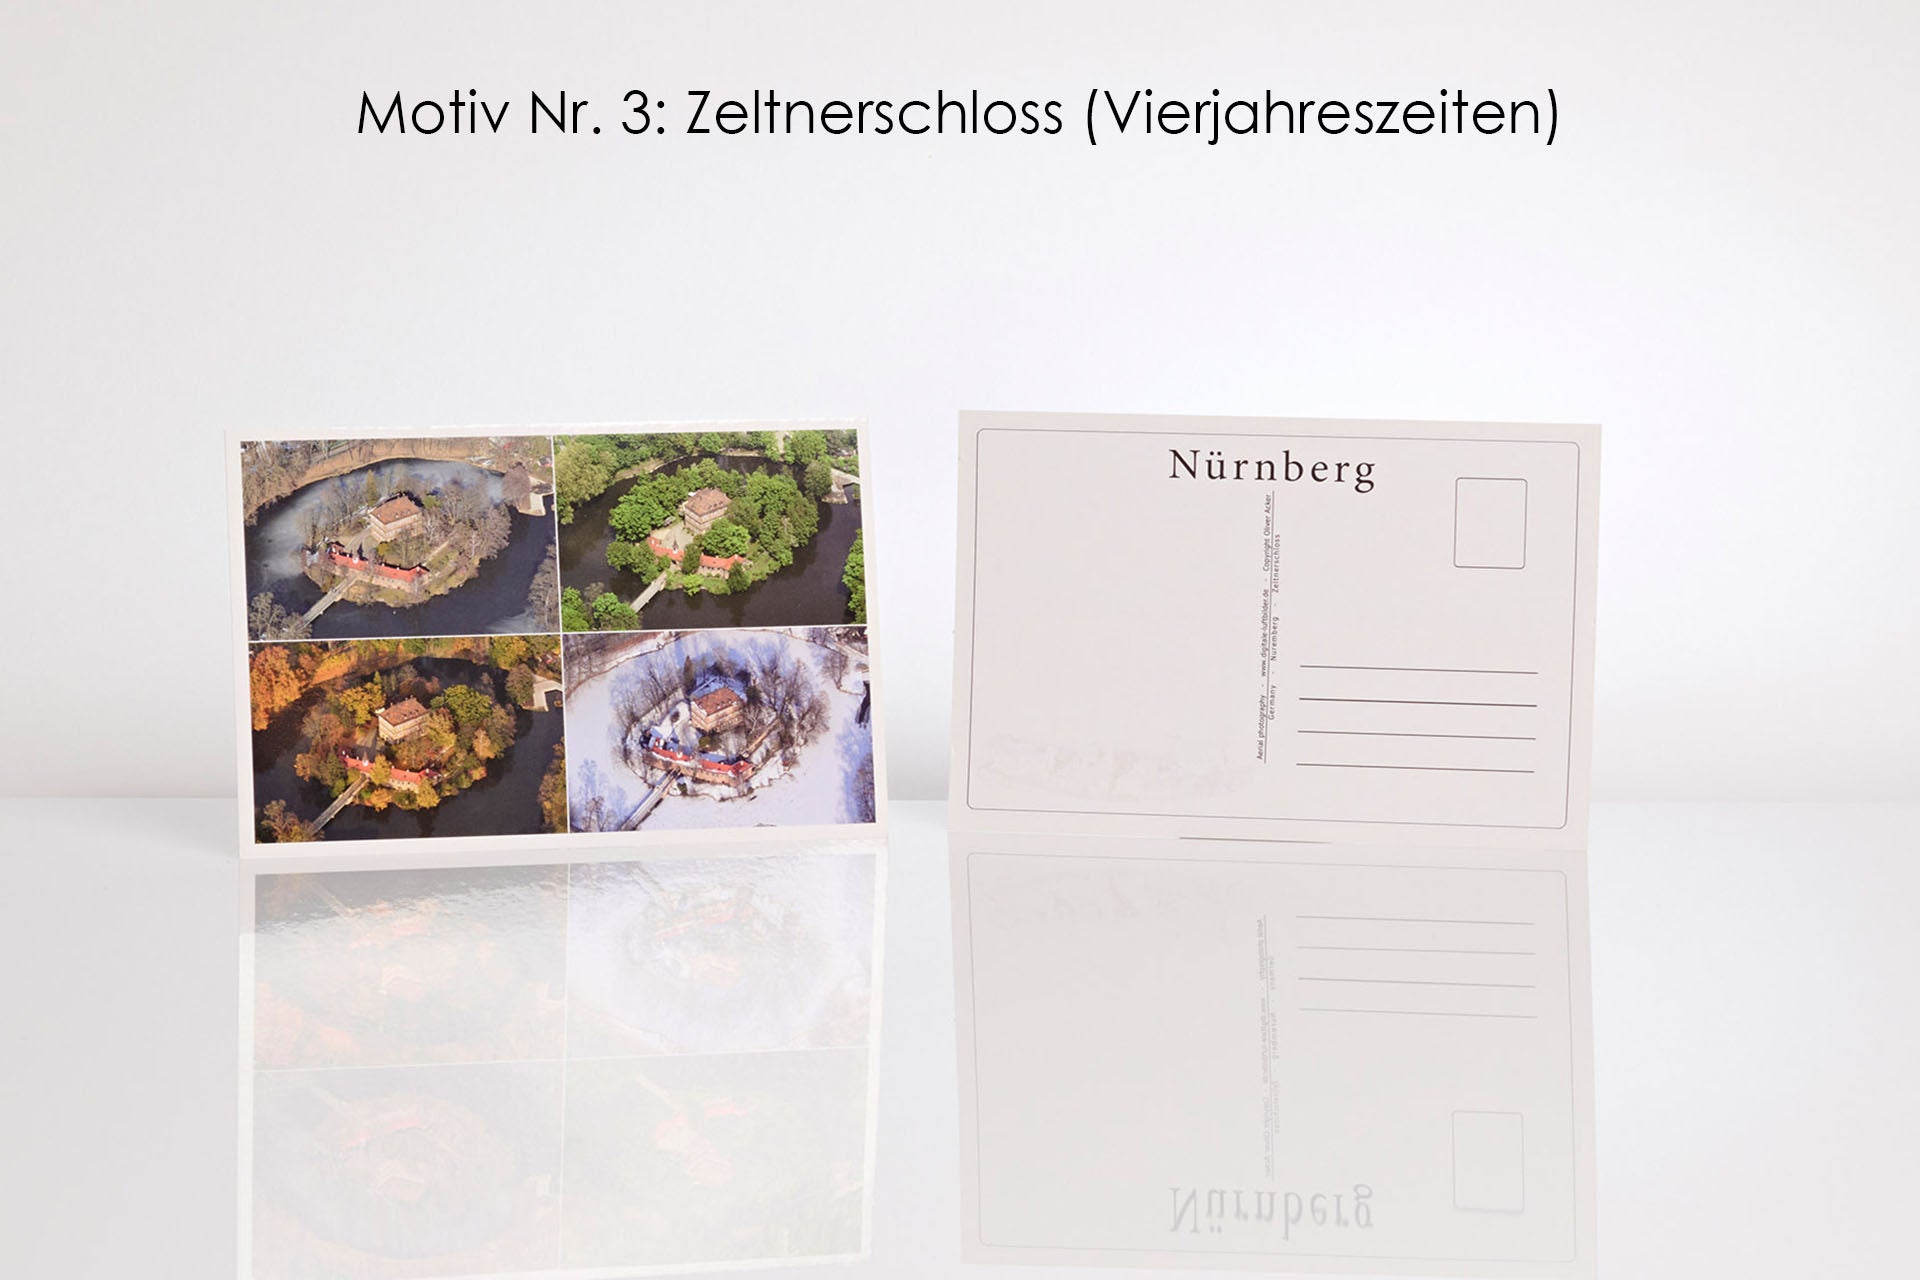 Die Nürnberg-Postkarten